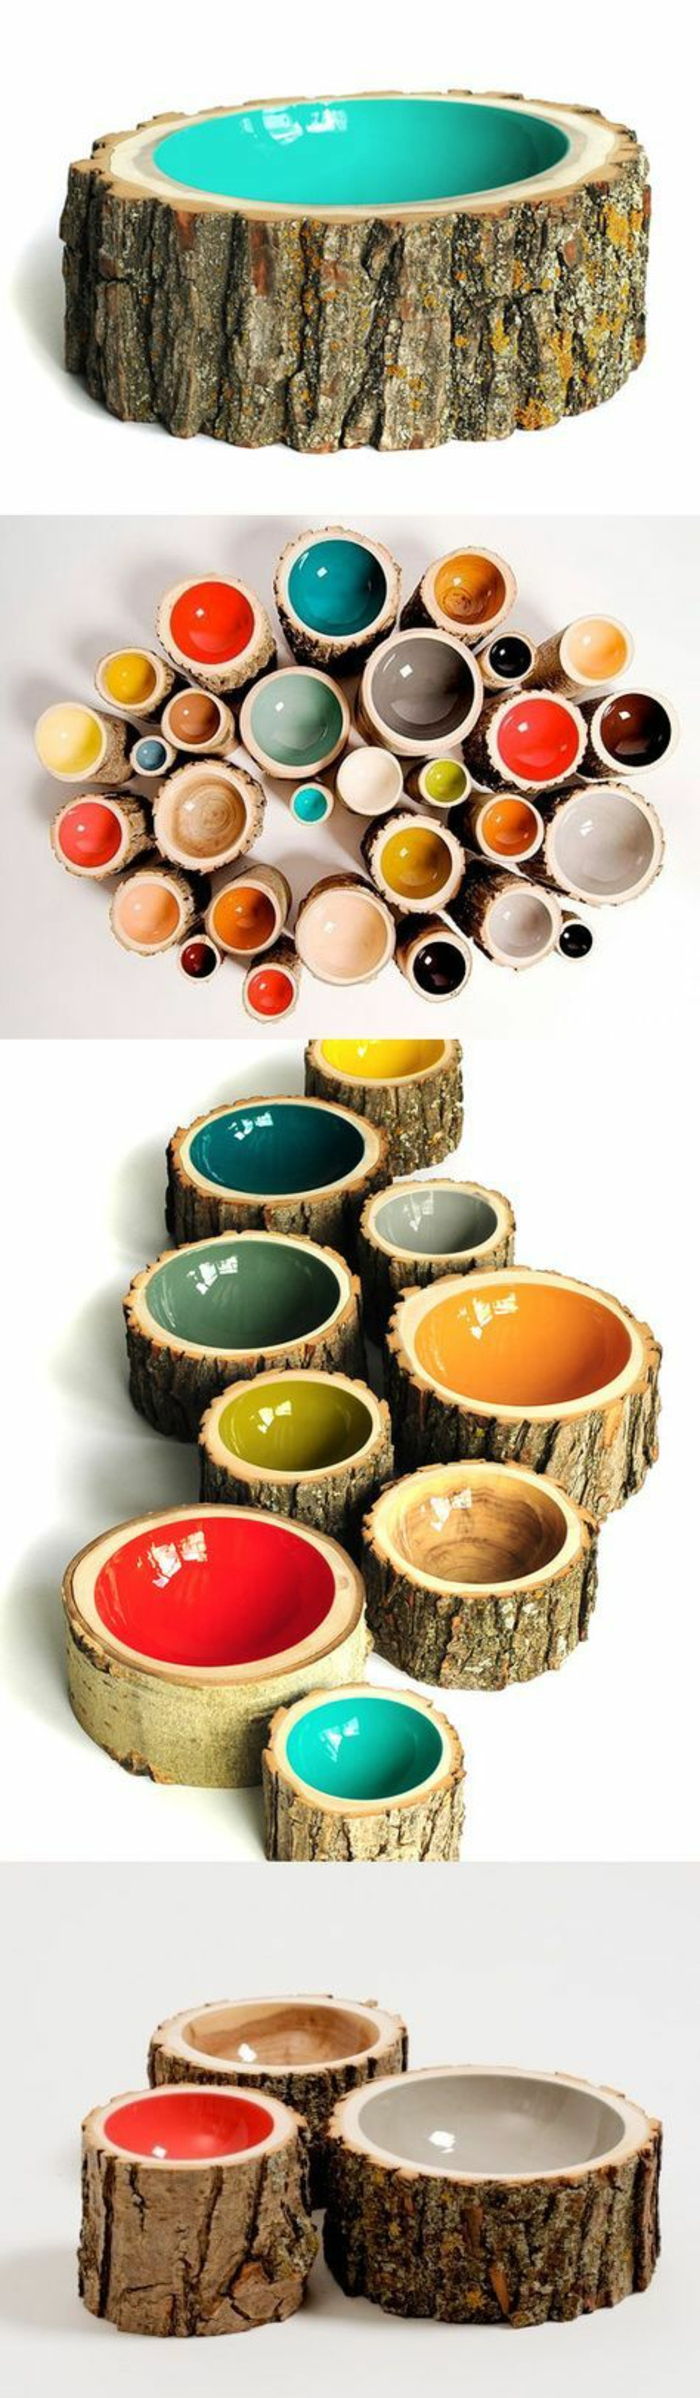 14-ścienne plastry półka drewno-drewno Kolorowe-color-creative-idea-round-półki